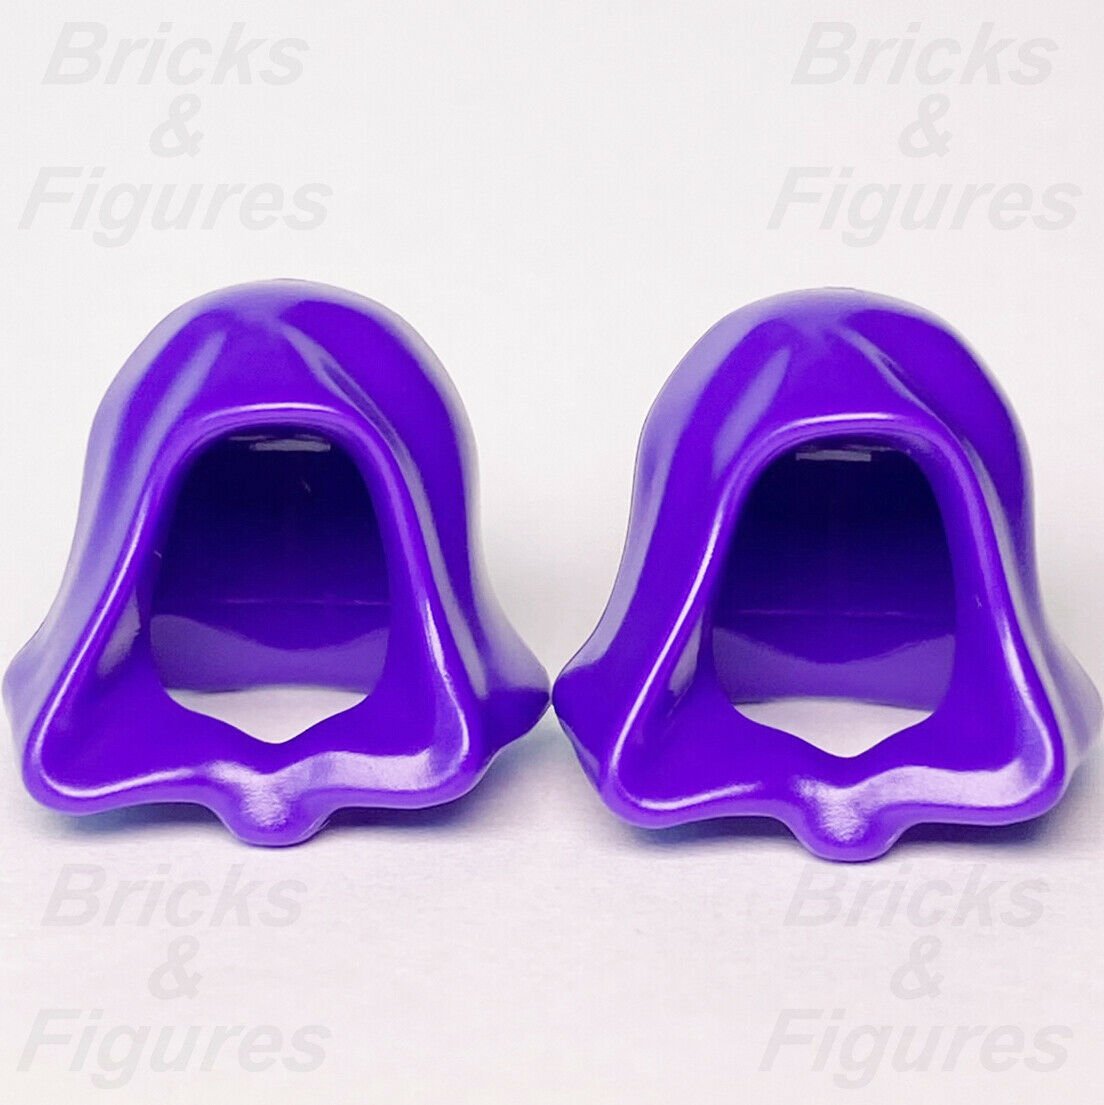 2 x Star Wars LEGO Dark Purple Robe Hoods Minifigure Headgear Parts 30381 96232 - Bricks & Figures